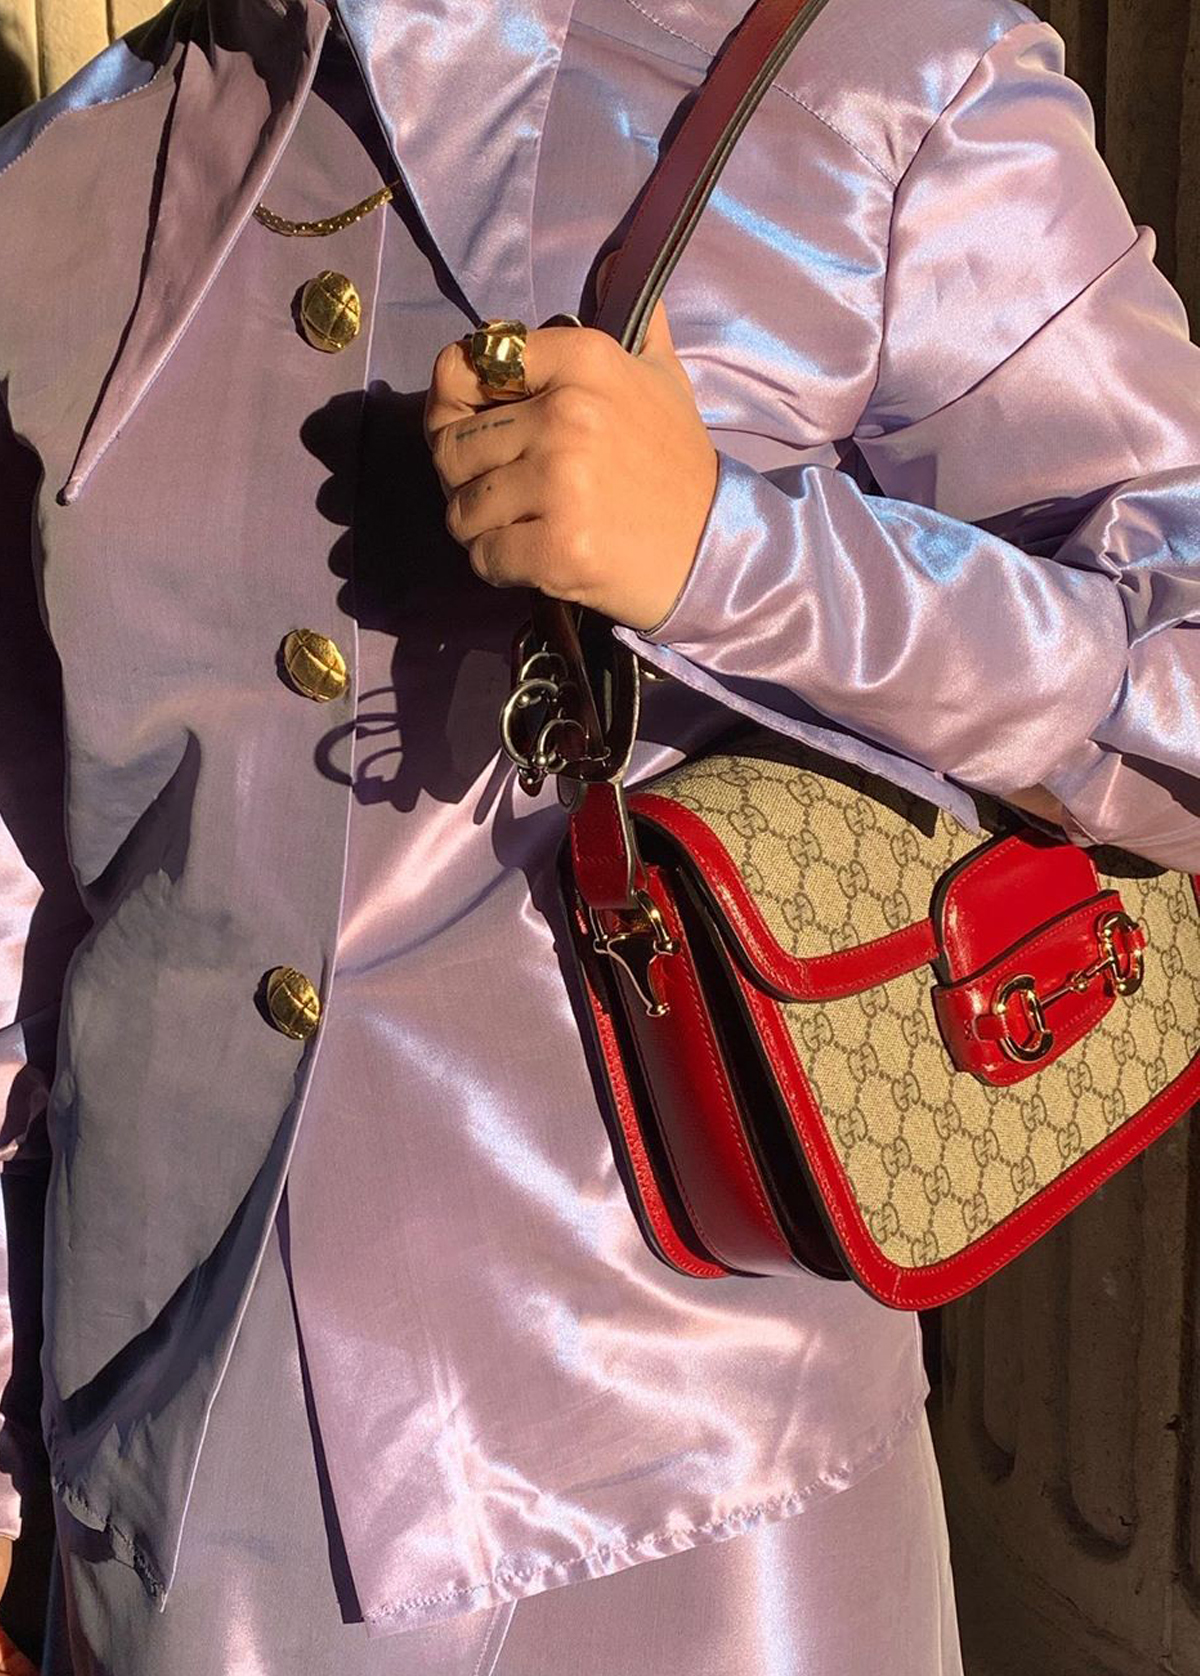 Best designer handbags 2020: Gucci 1955 bag as seen on influencer maria bernad in a purple jacket